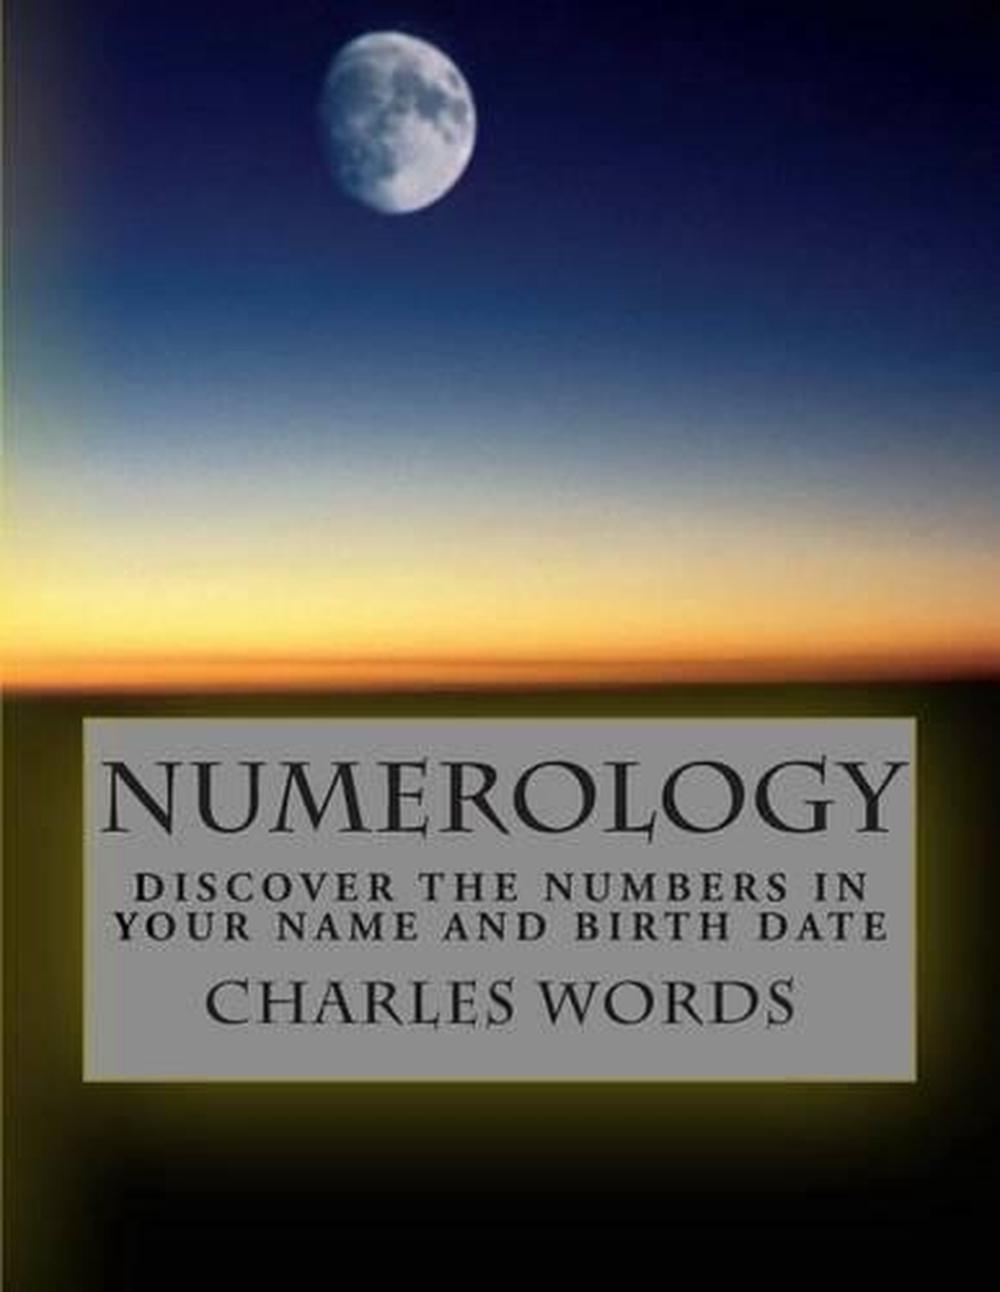 Numerology birth date